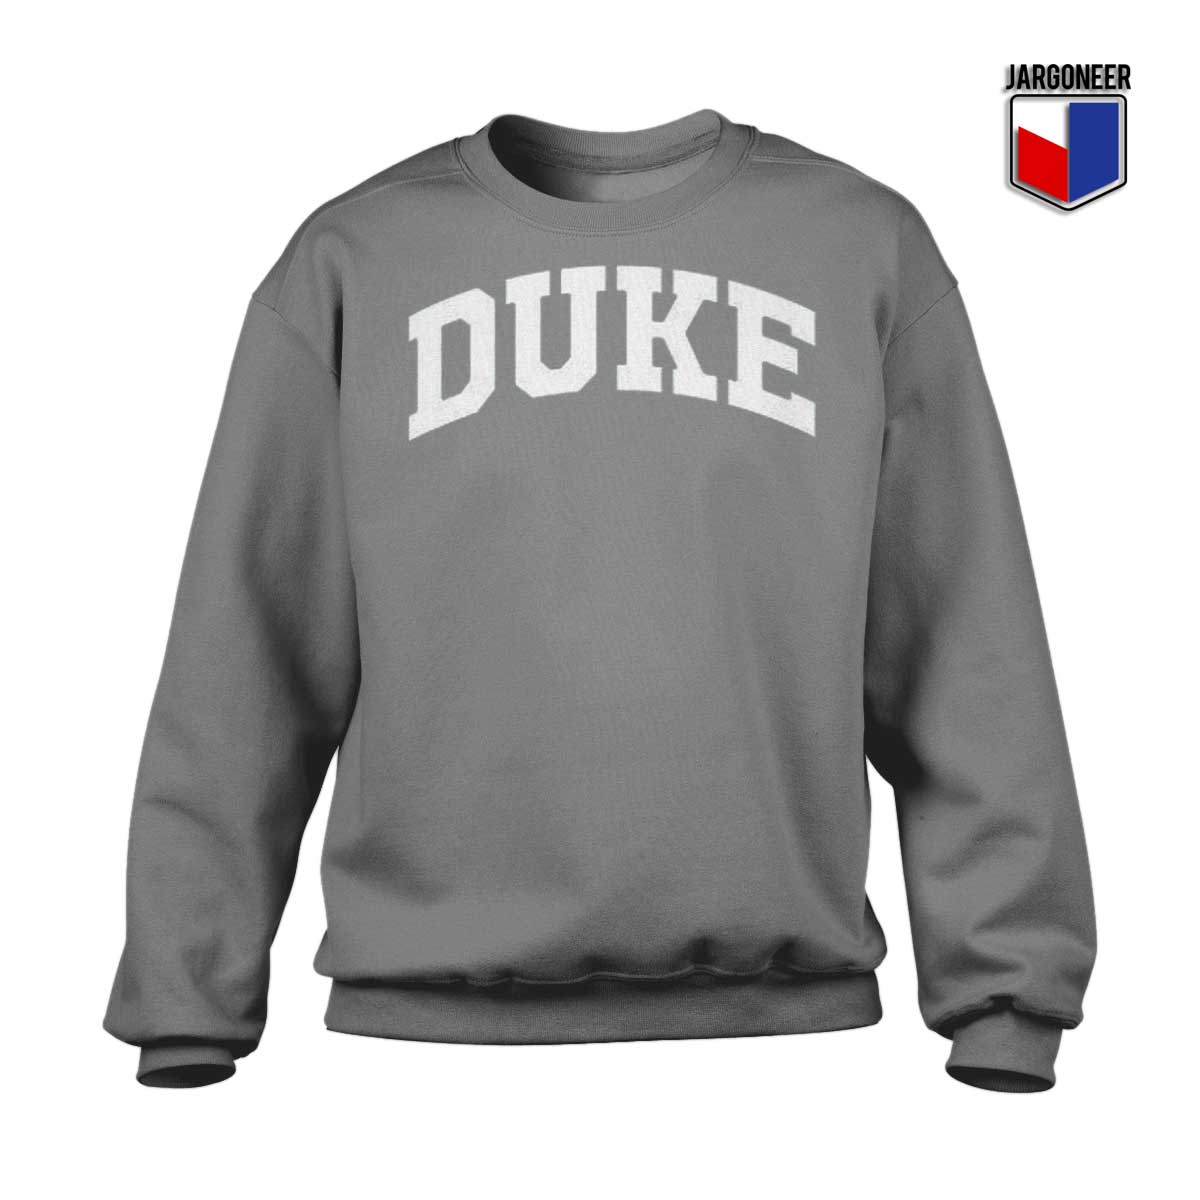 Duke University Sweatshirt KM  University sweatshirts, Duke university,  Sweatshirts